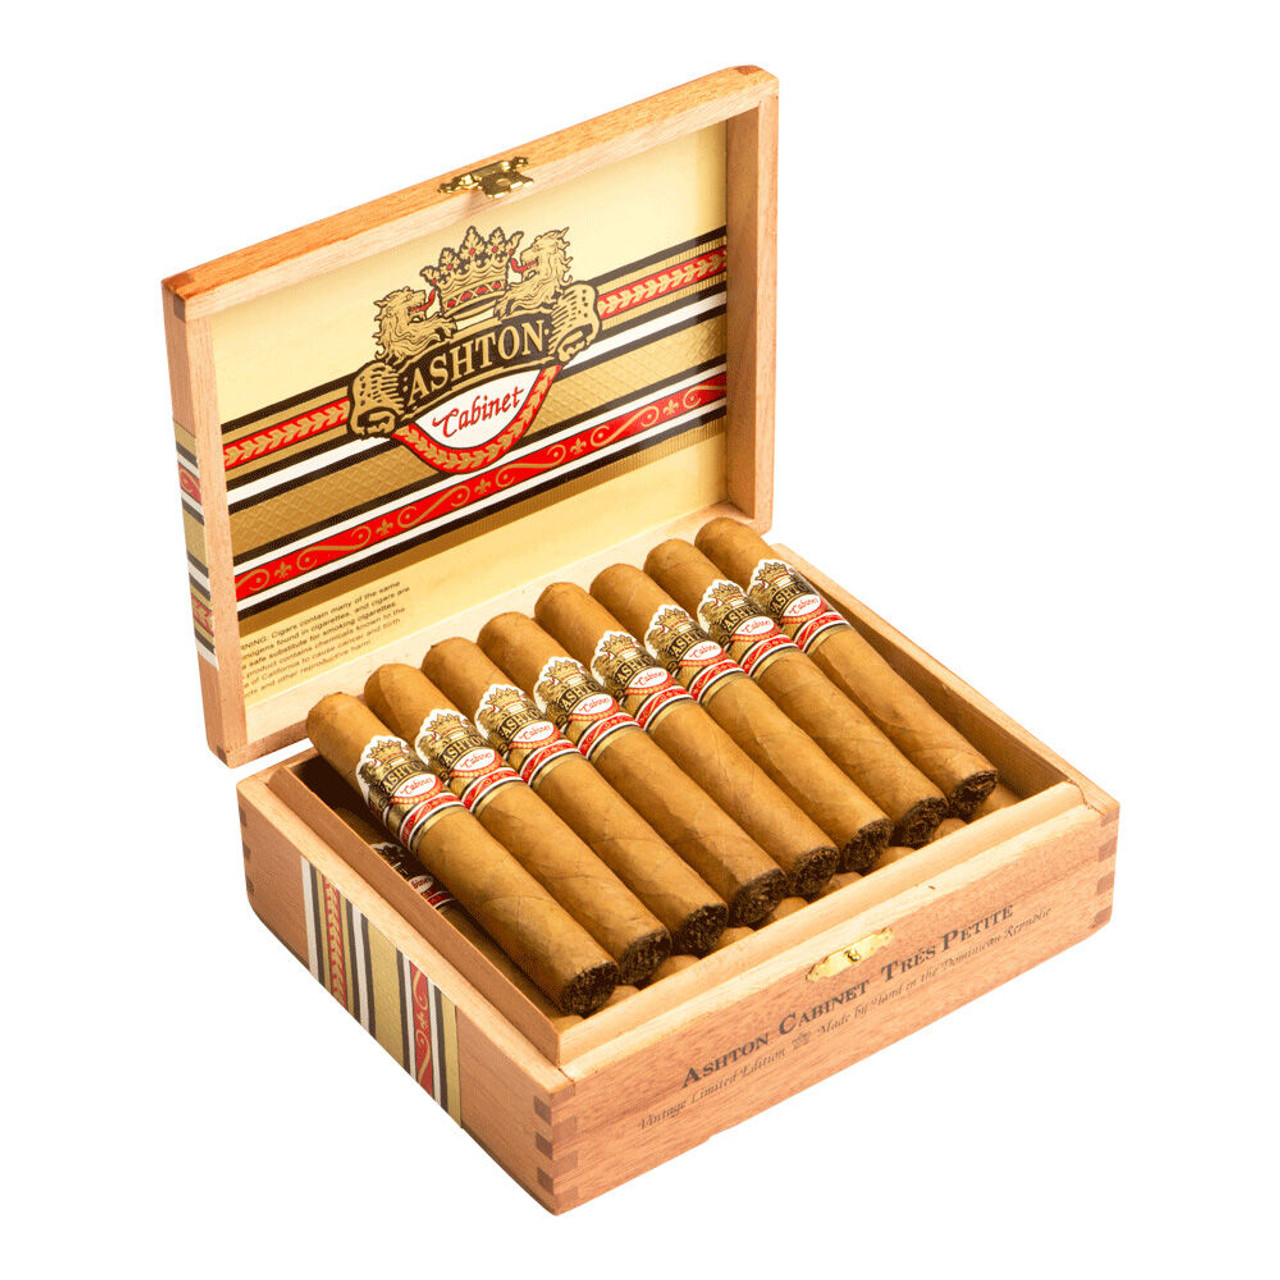 Ashton Cabinet Pyramids Cigars - 6 x 52 (Box of 25) Open